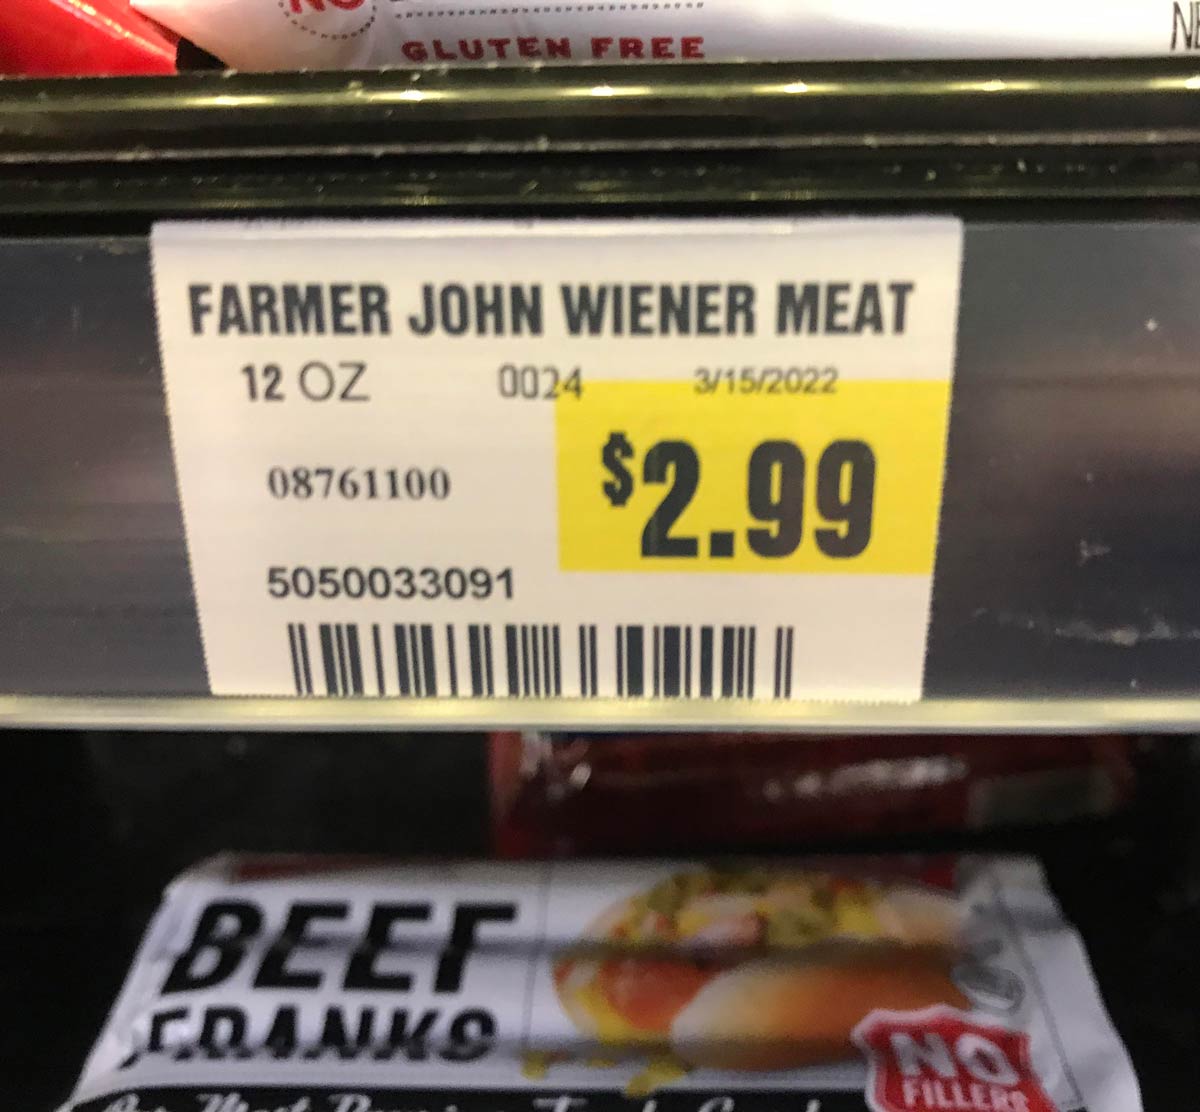 Poor Farmer John